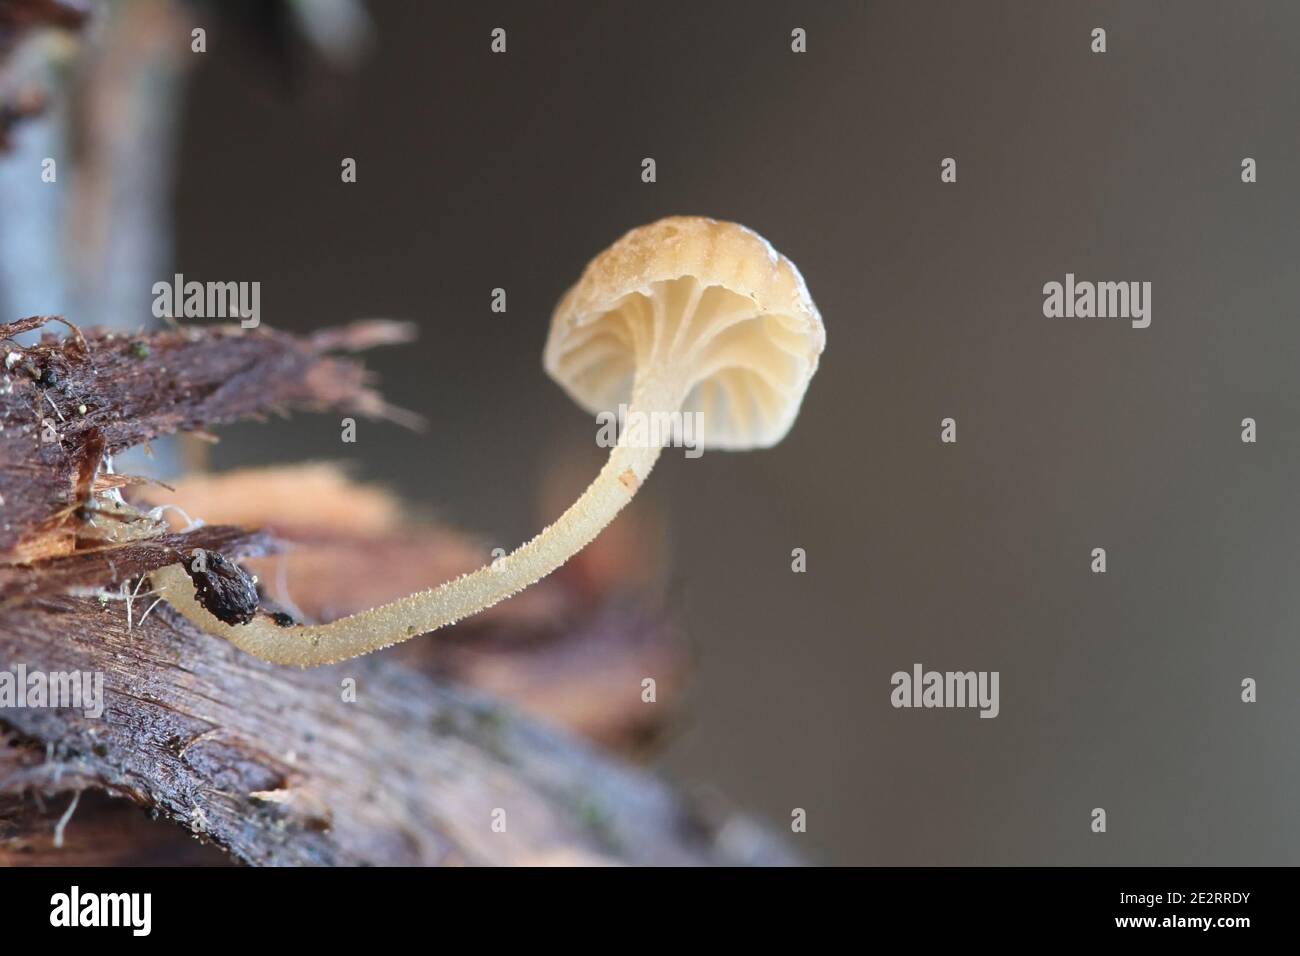 Mycena clavata, also called Phloeomana clavata, known as bark bonnet, wild mushroom from Finland Stock Photo